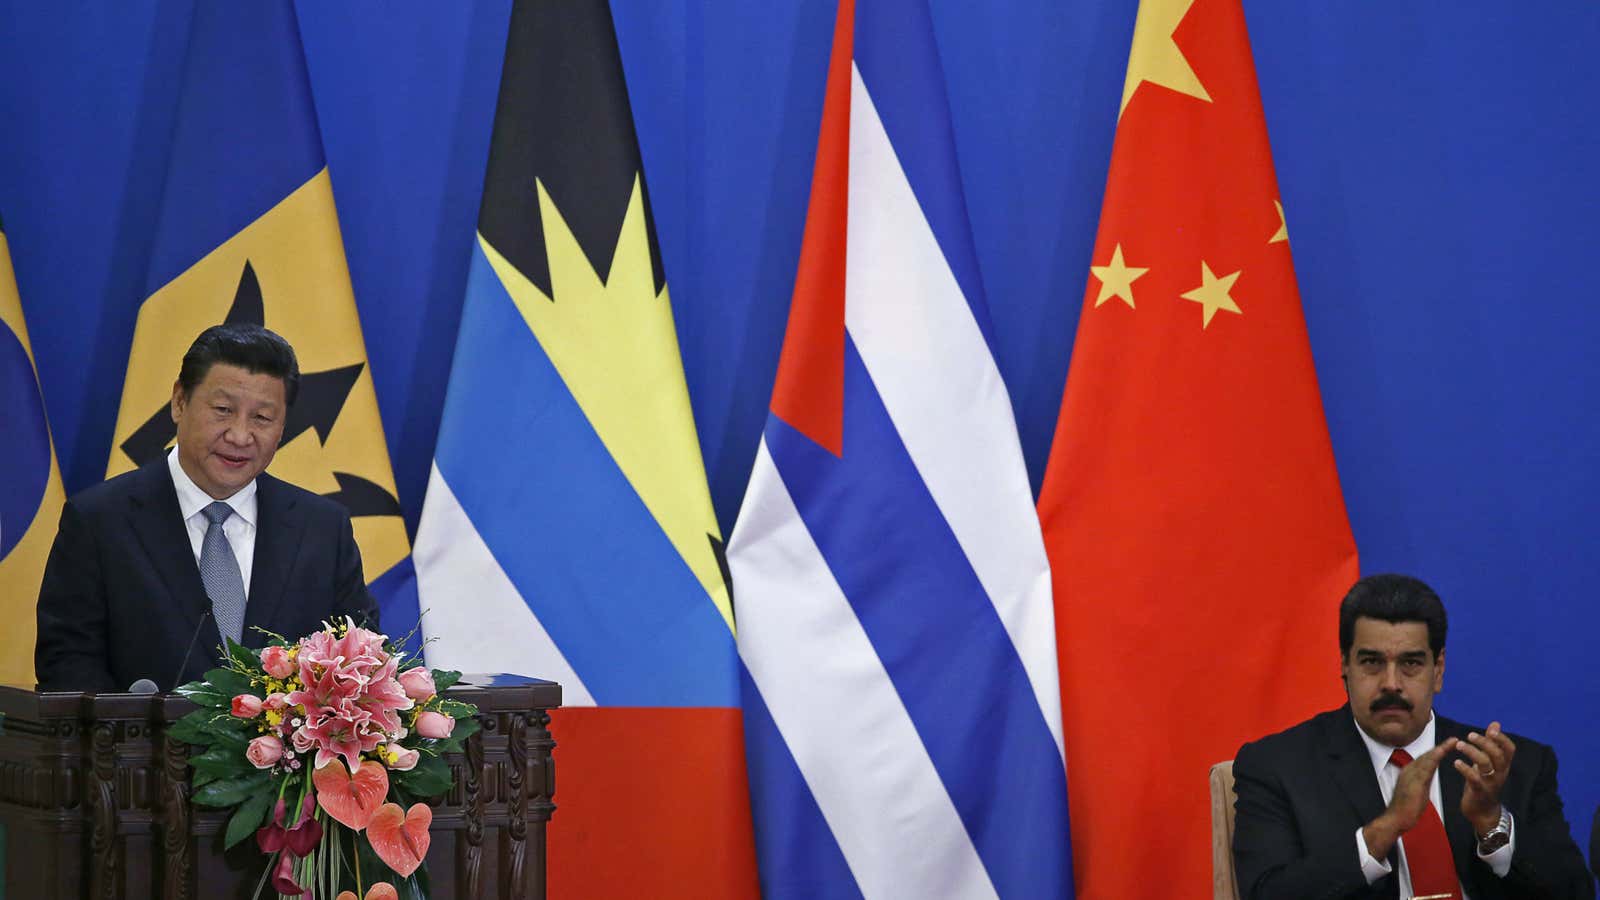 Venezuelan president Nicolas Maduro has good reason to applaud Xi Jinping.